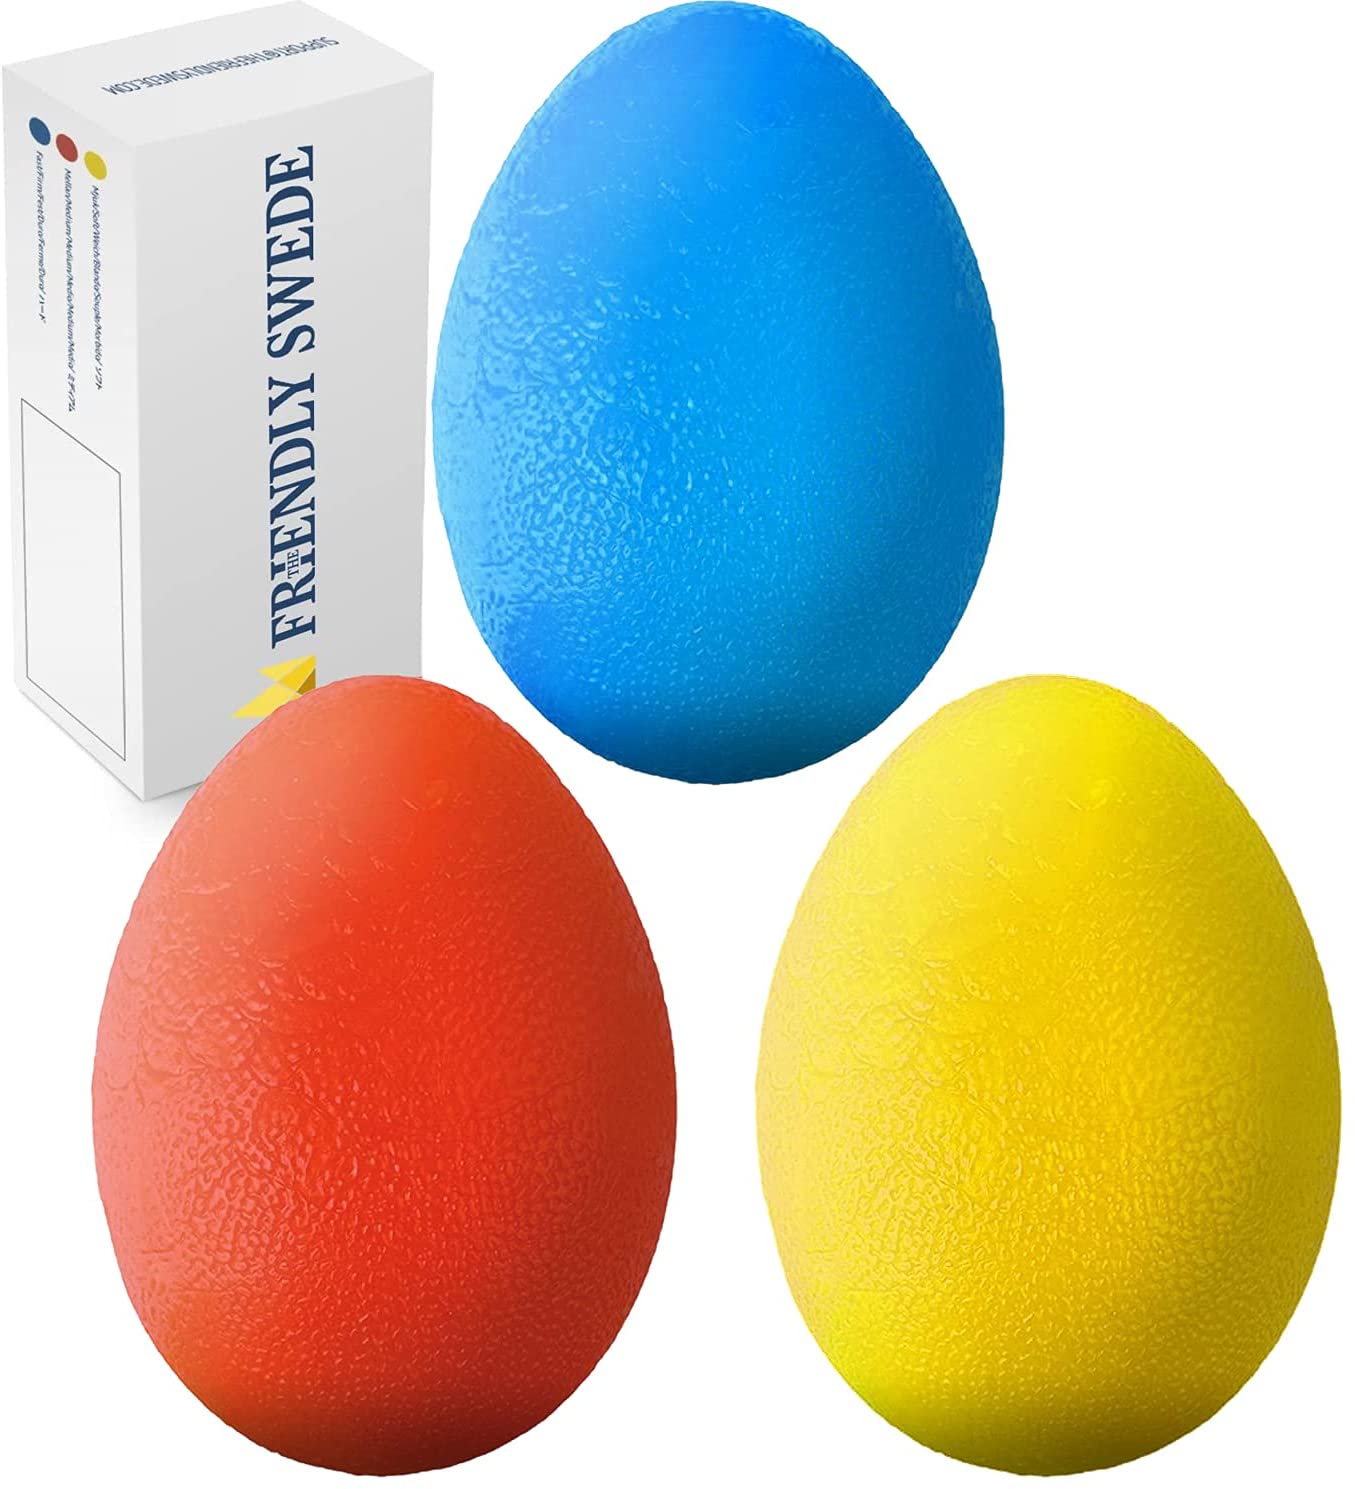 Egg-Shaped Stress Balls